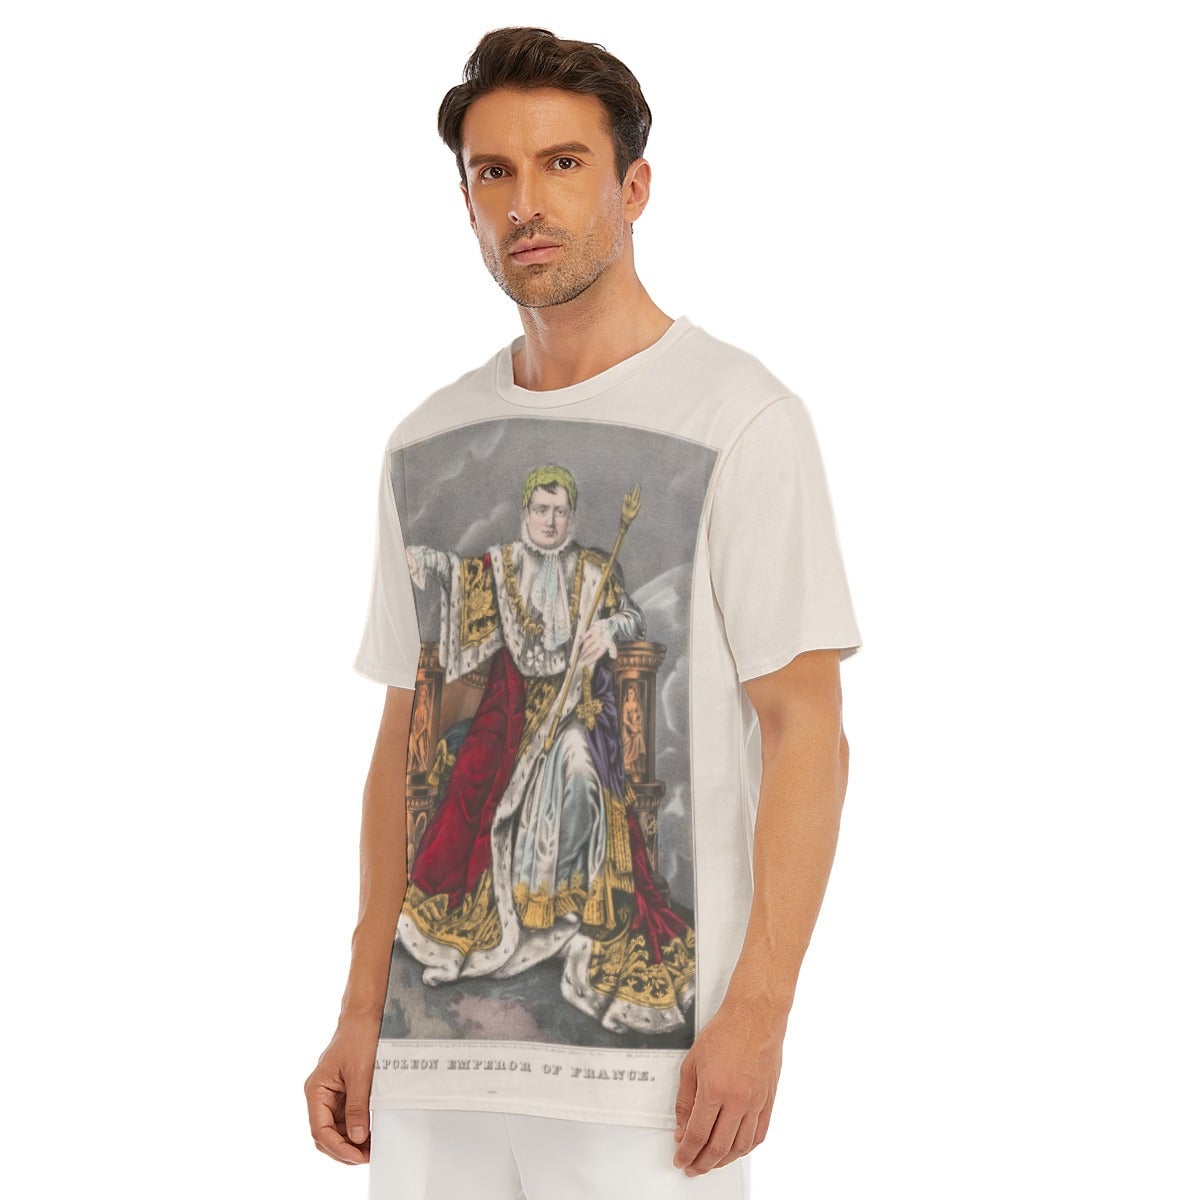 Emperor of France Napoleon Bonaparte T-Shirt